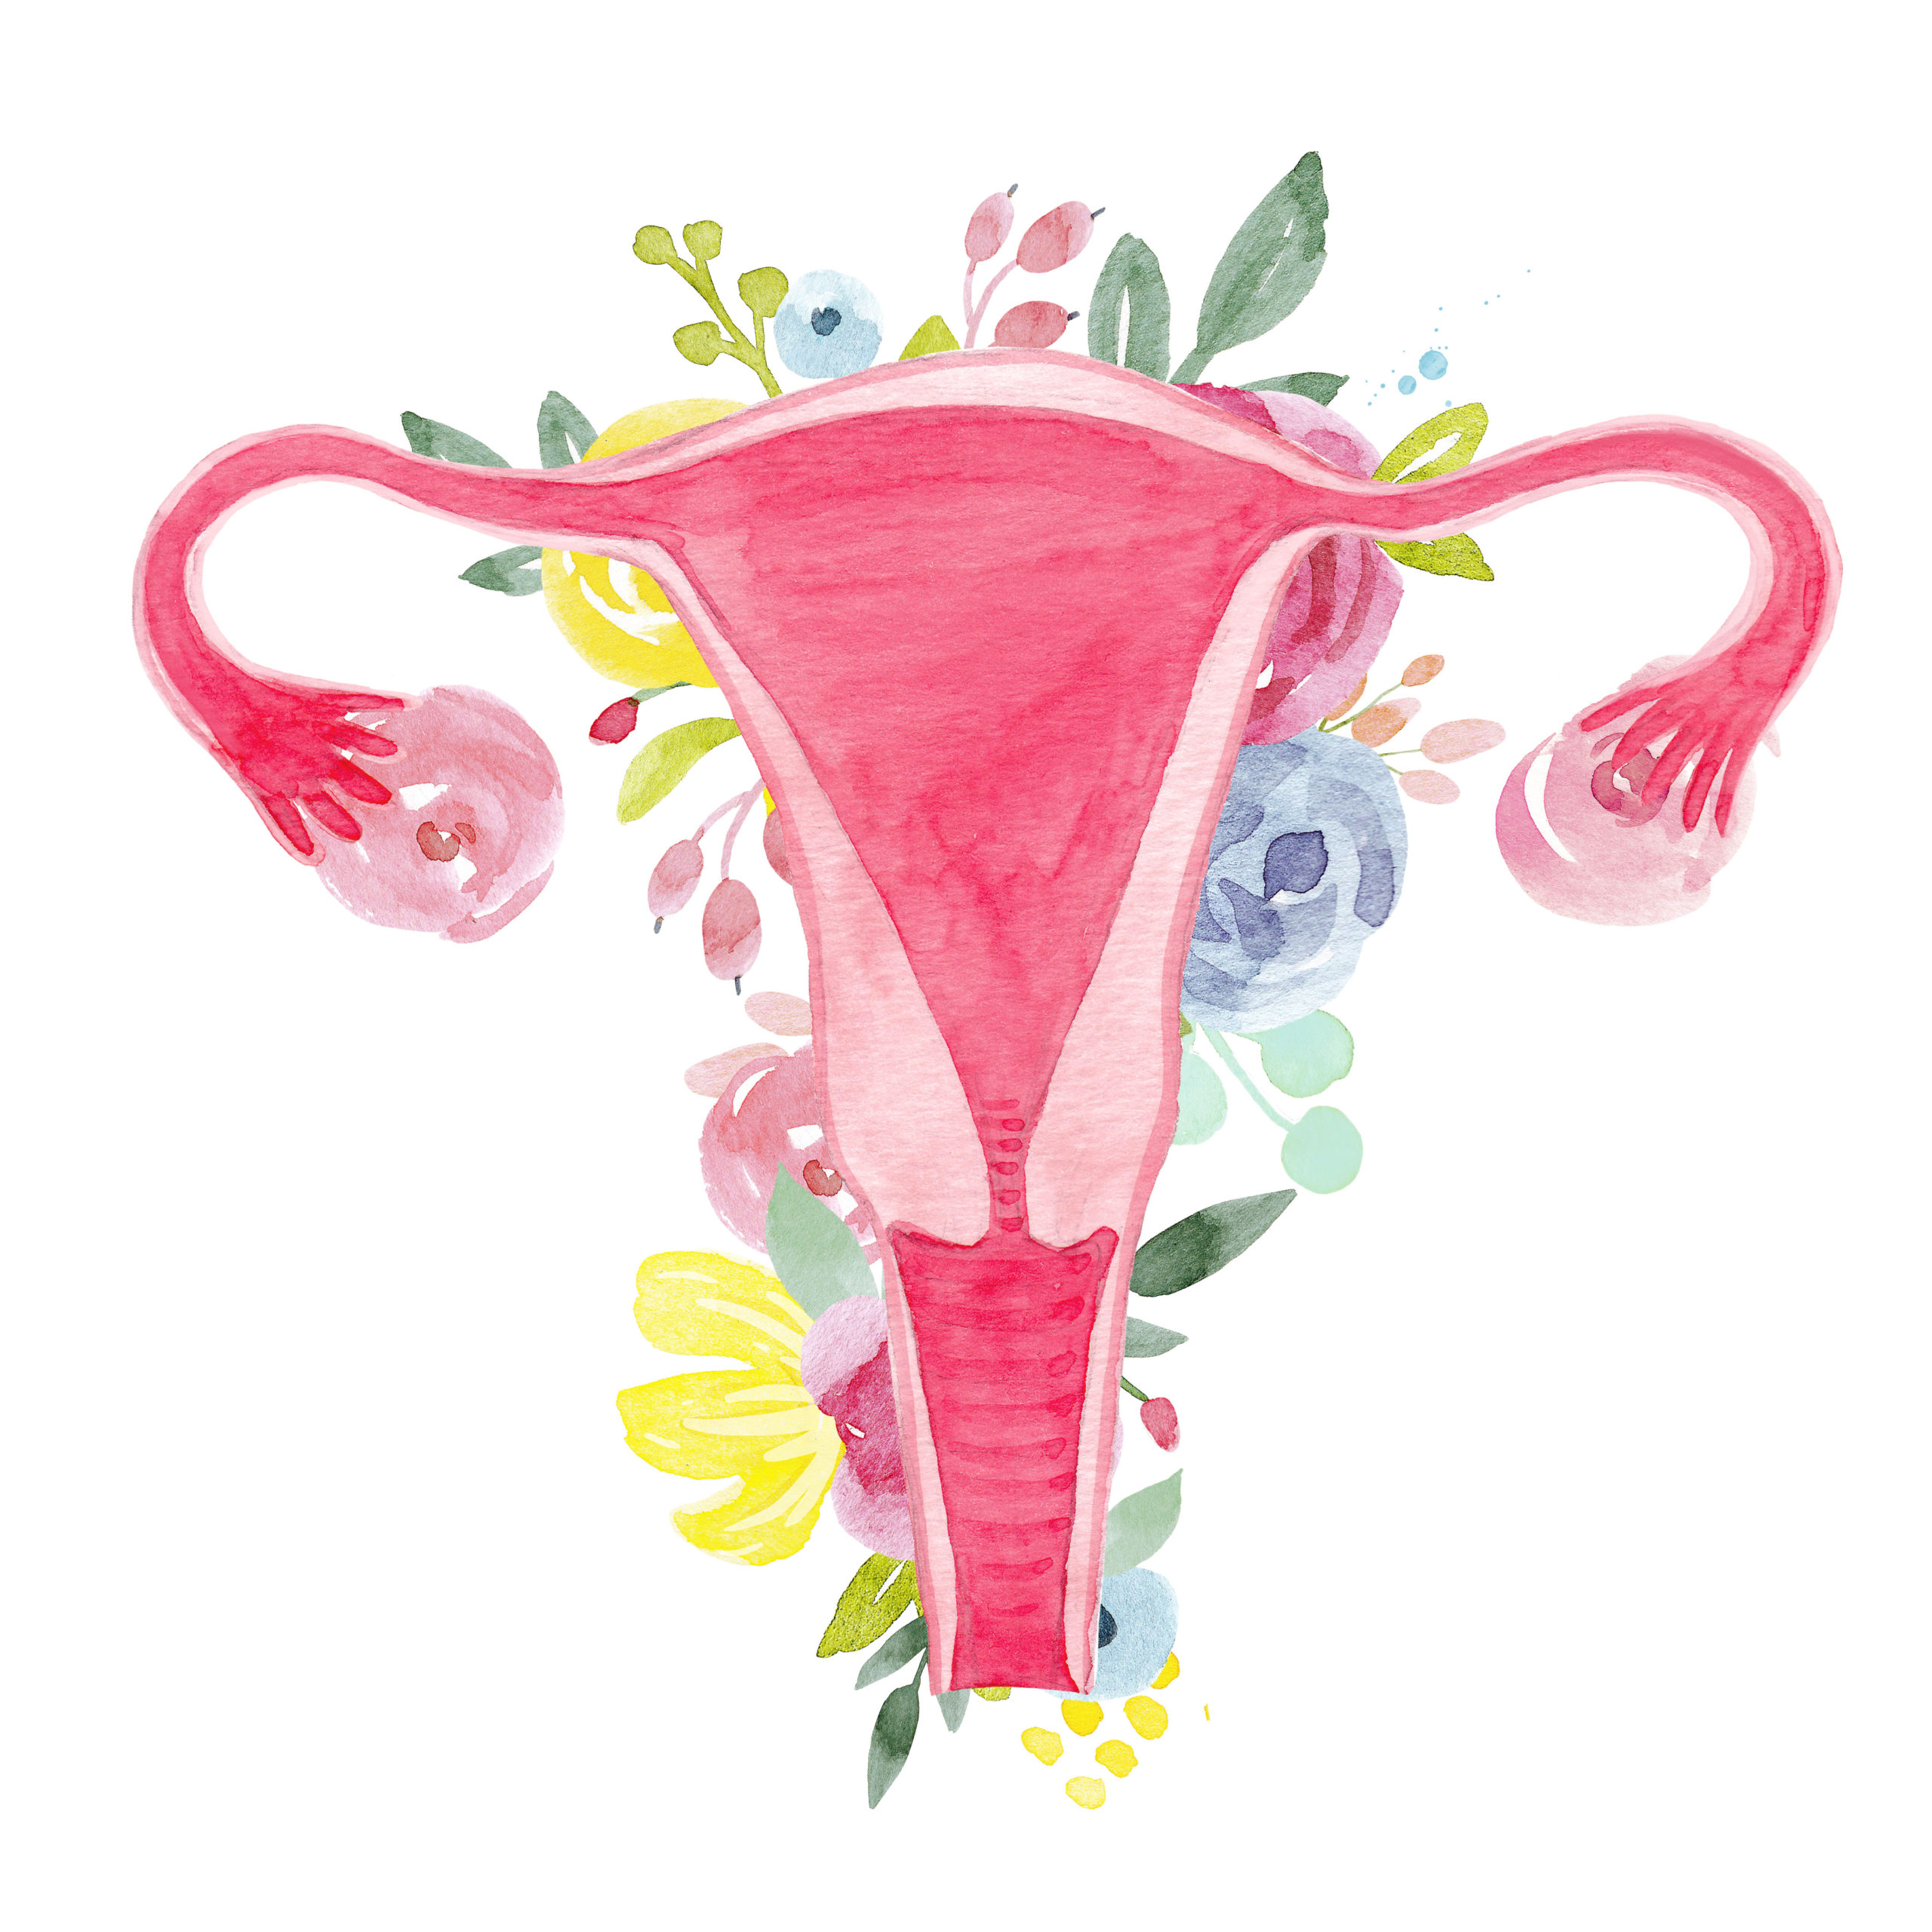 Watercolor,Women's,Print,,Organ,Of,The,Uterus,With,Flowers,,Feminism,